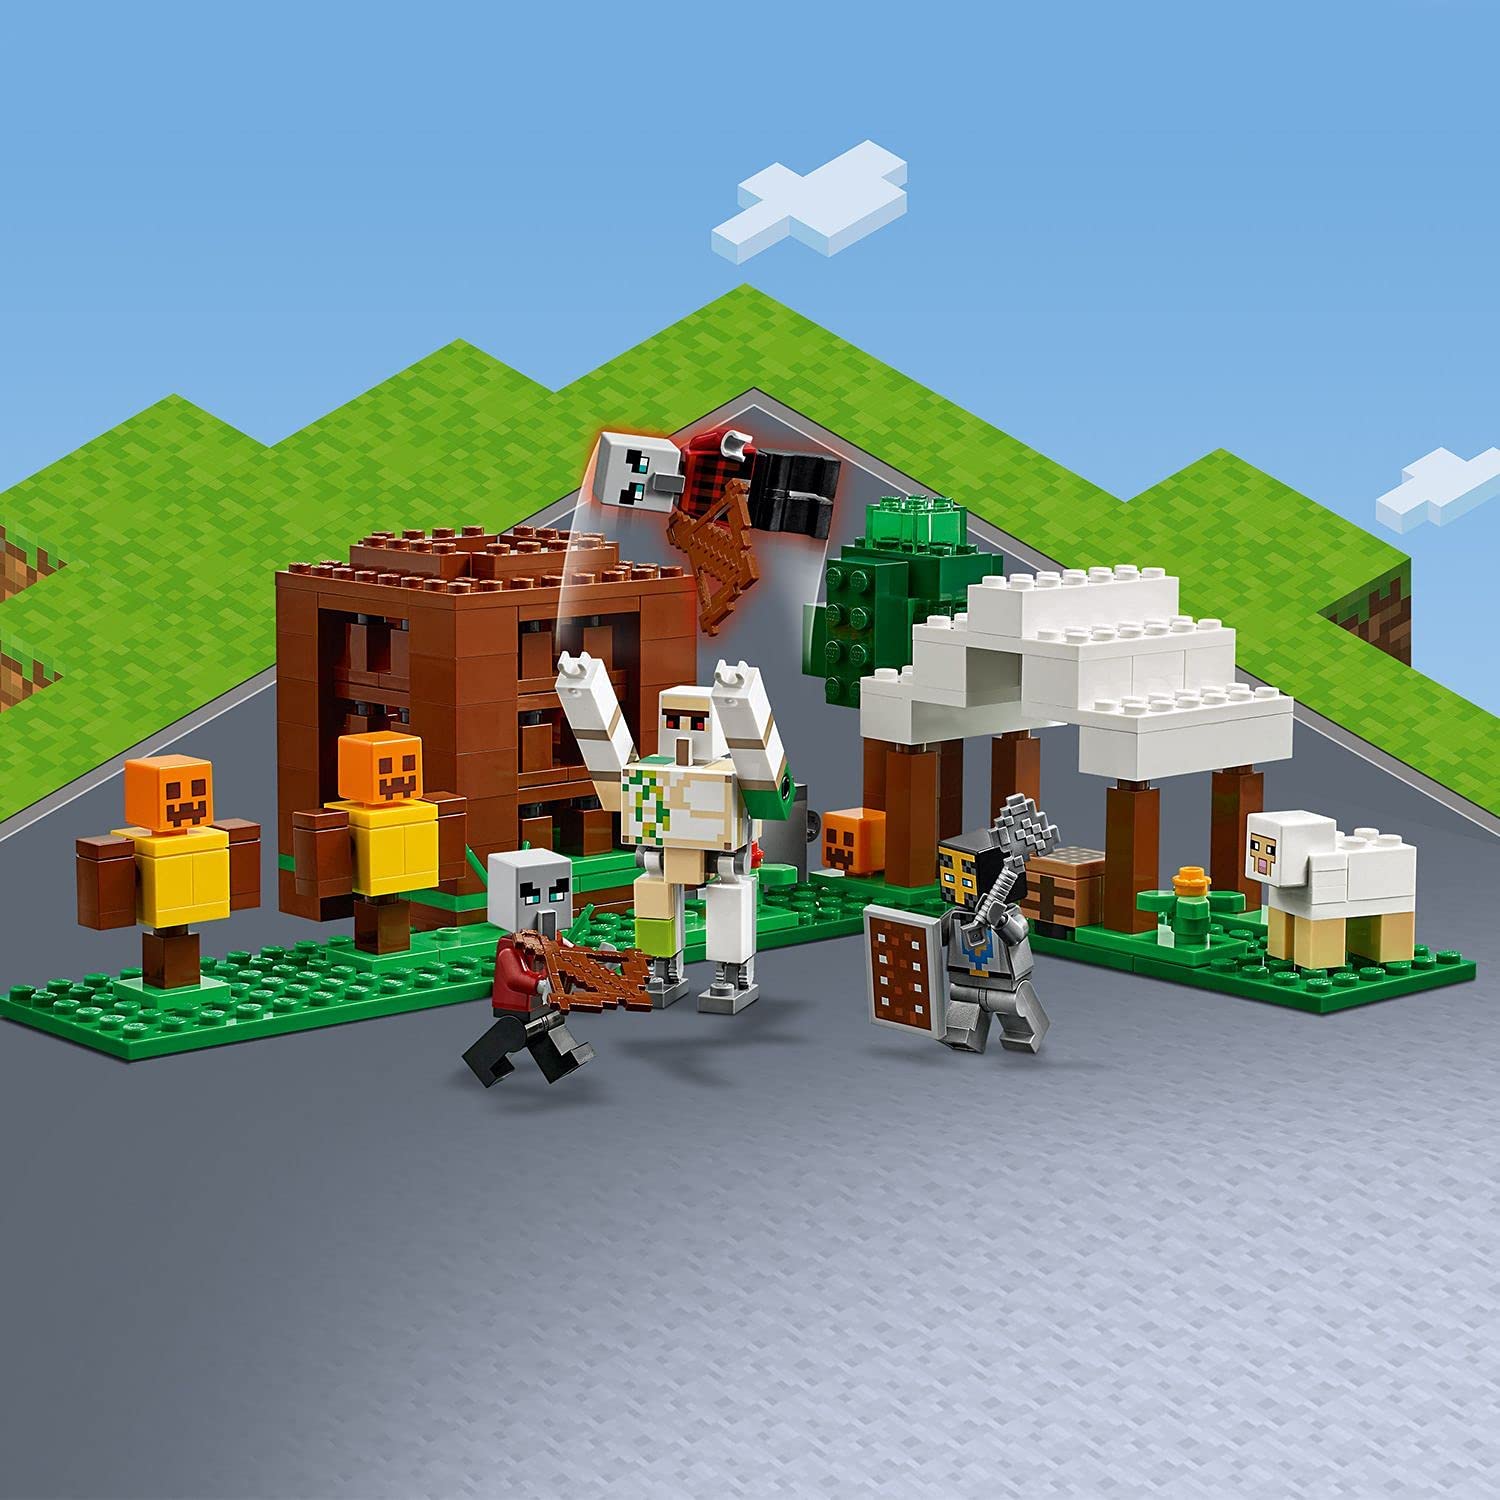 LEGO 21159 Minecraft Plundrarnas vakttorn